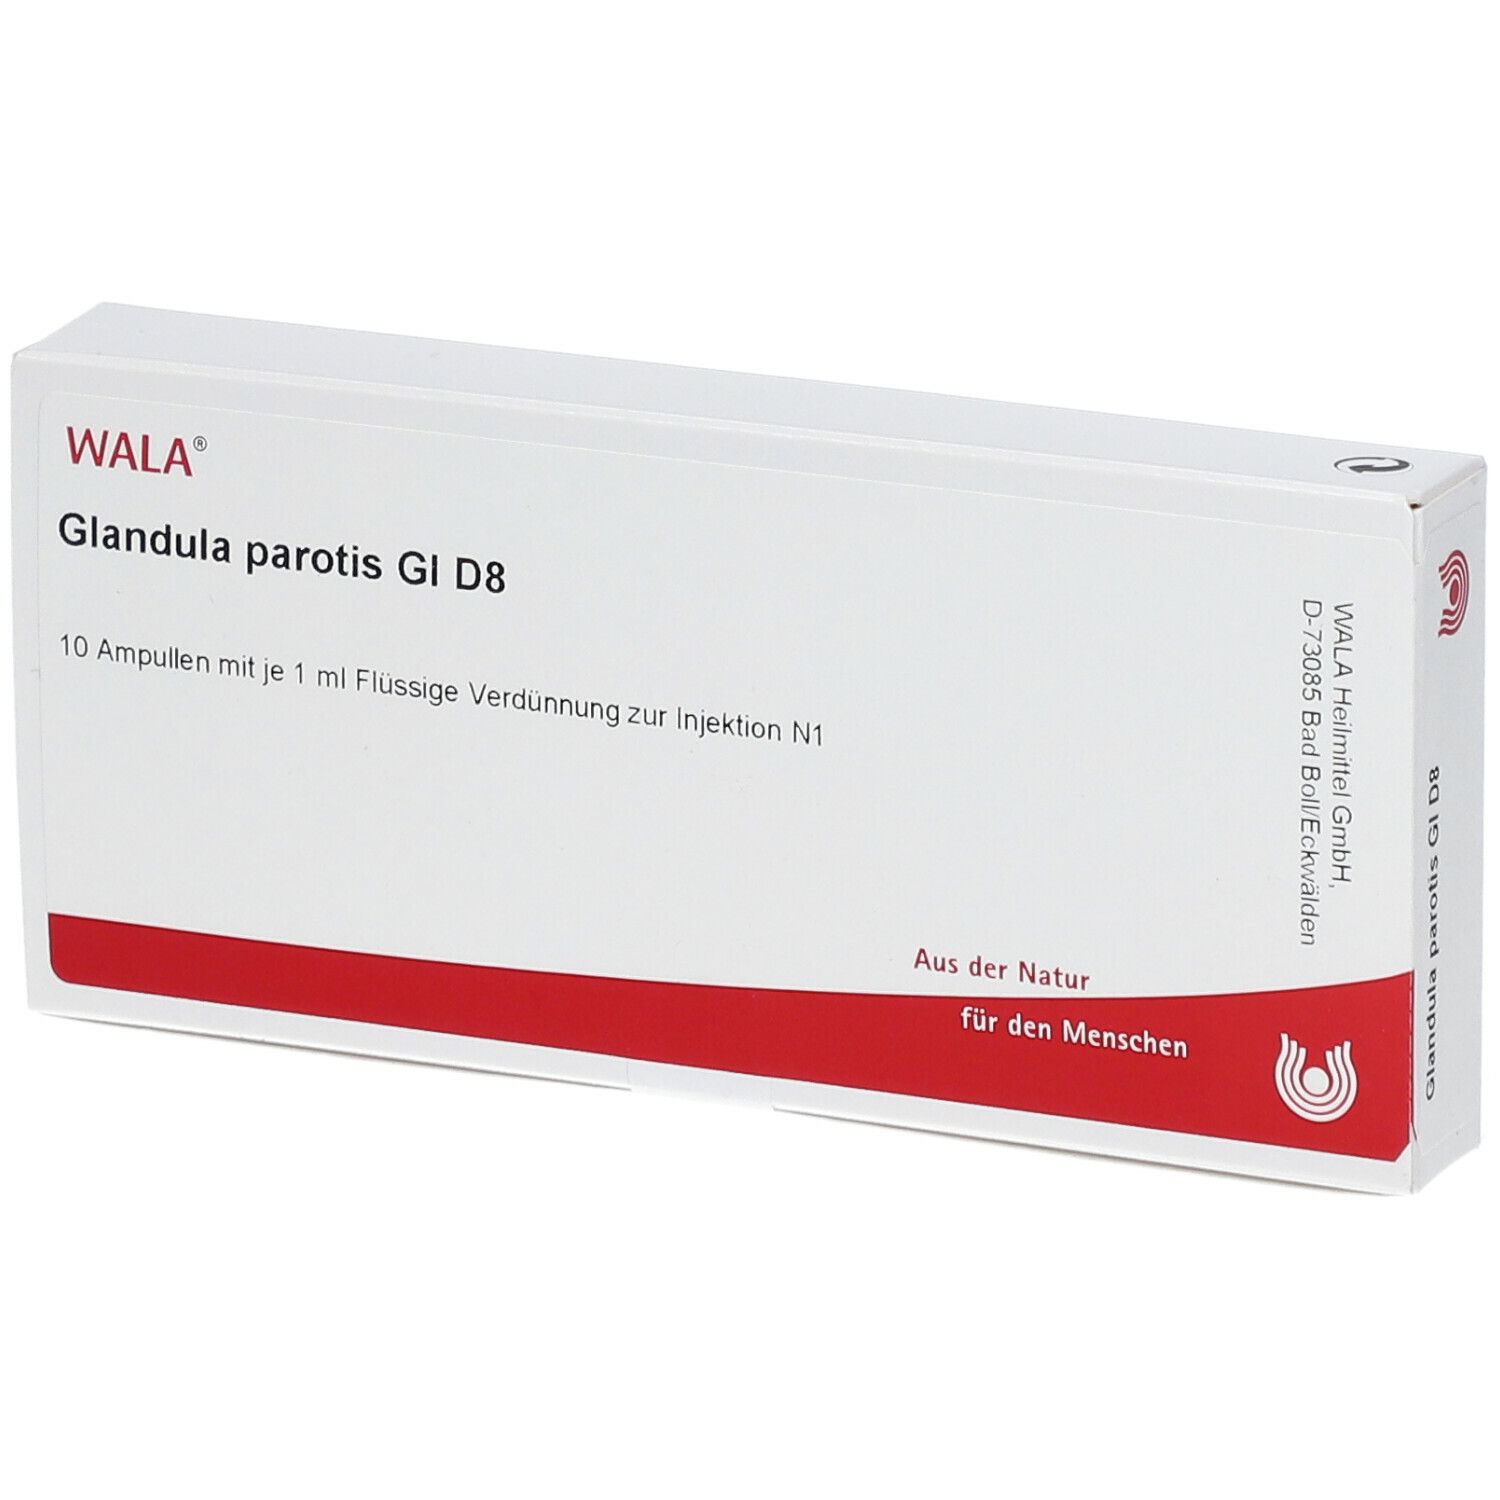 Wala® Glandula parotis Gl D 8